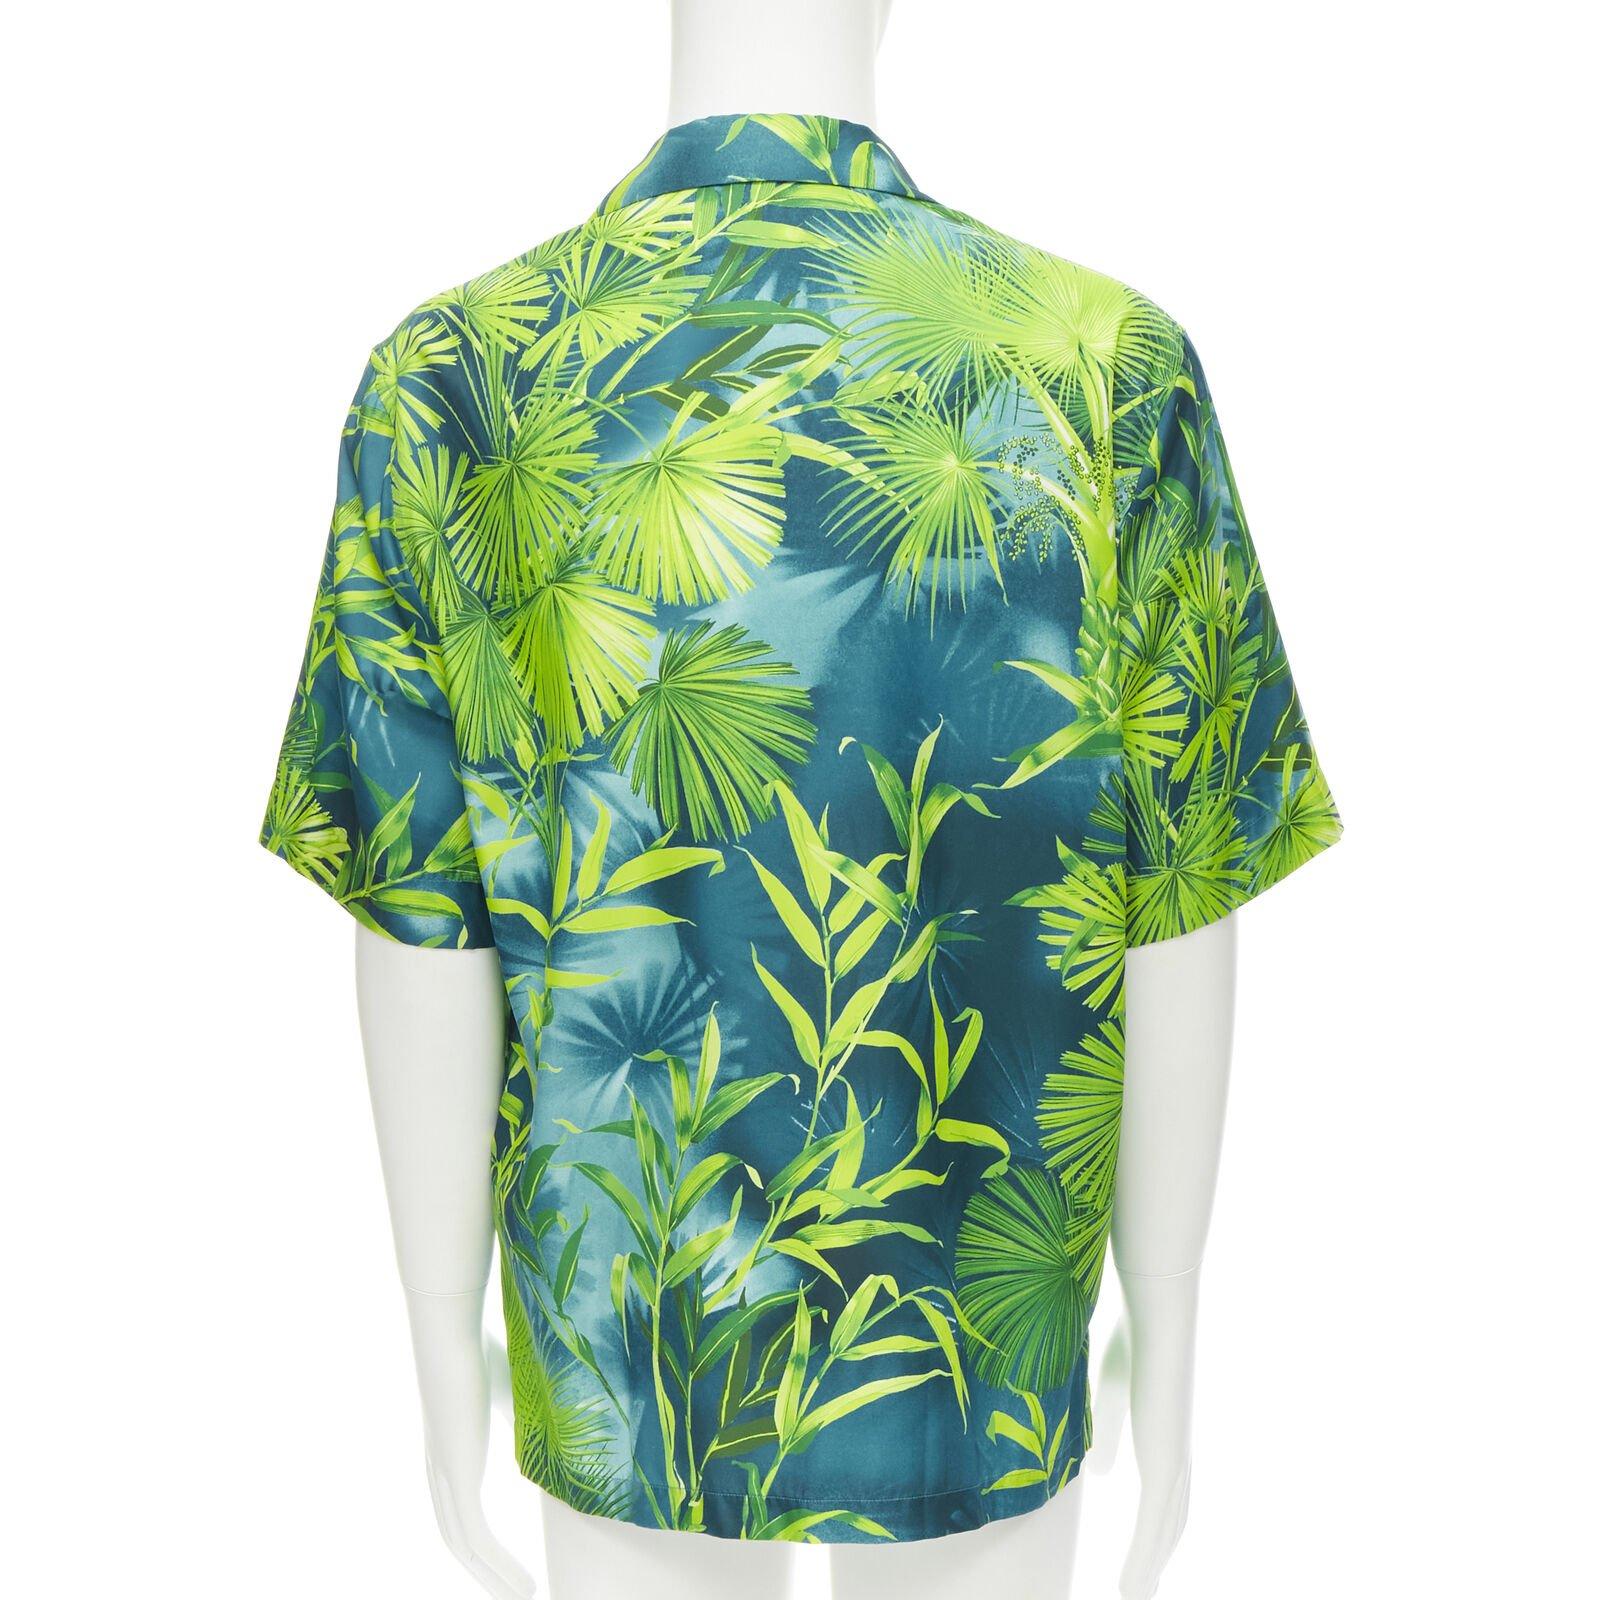 VERSACE 2020 Iconic JLo Jungle print green tropical print shirt EU41 XL For Sale 1